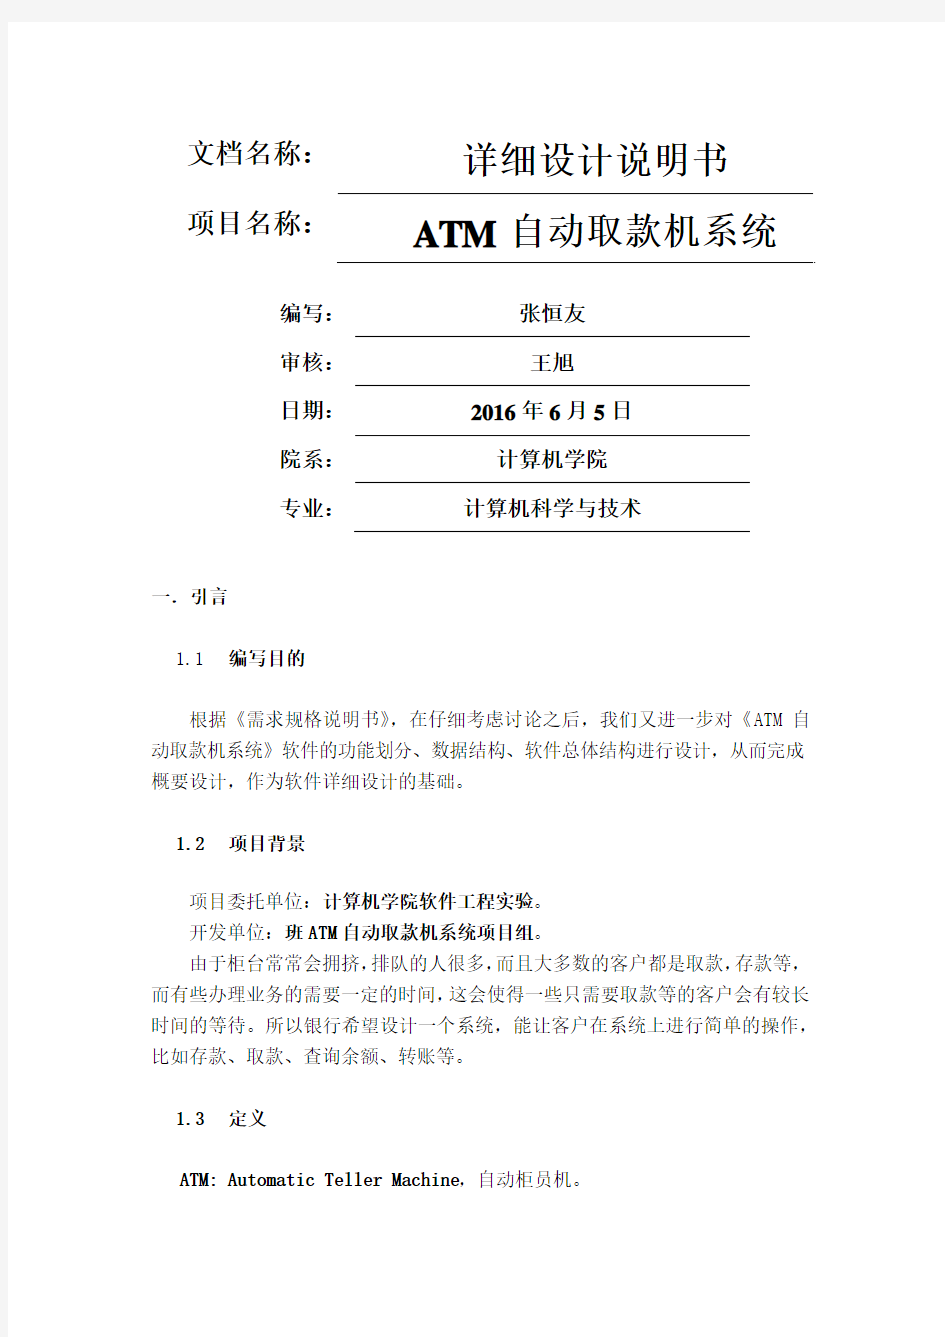 ATM自动取款机系统—详细设计说明书